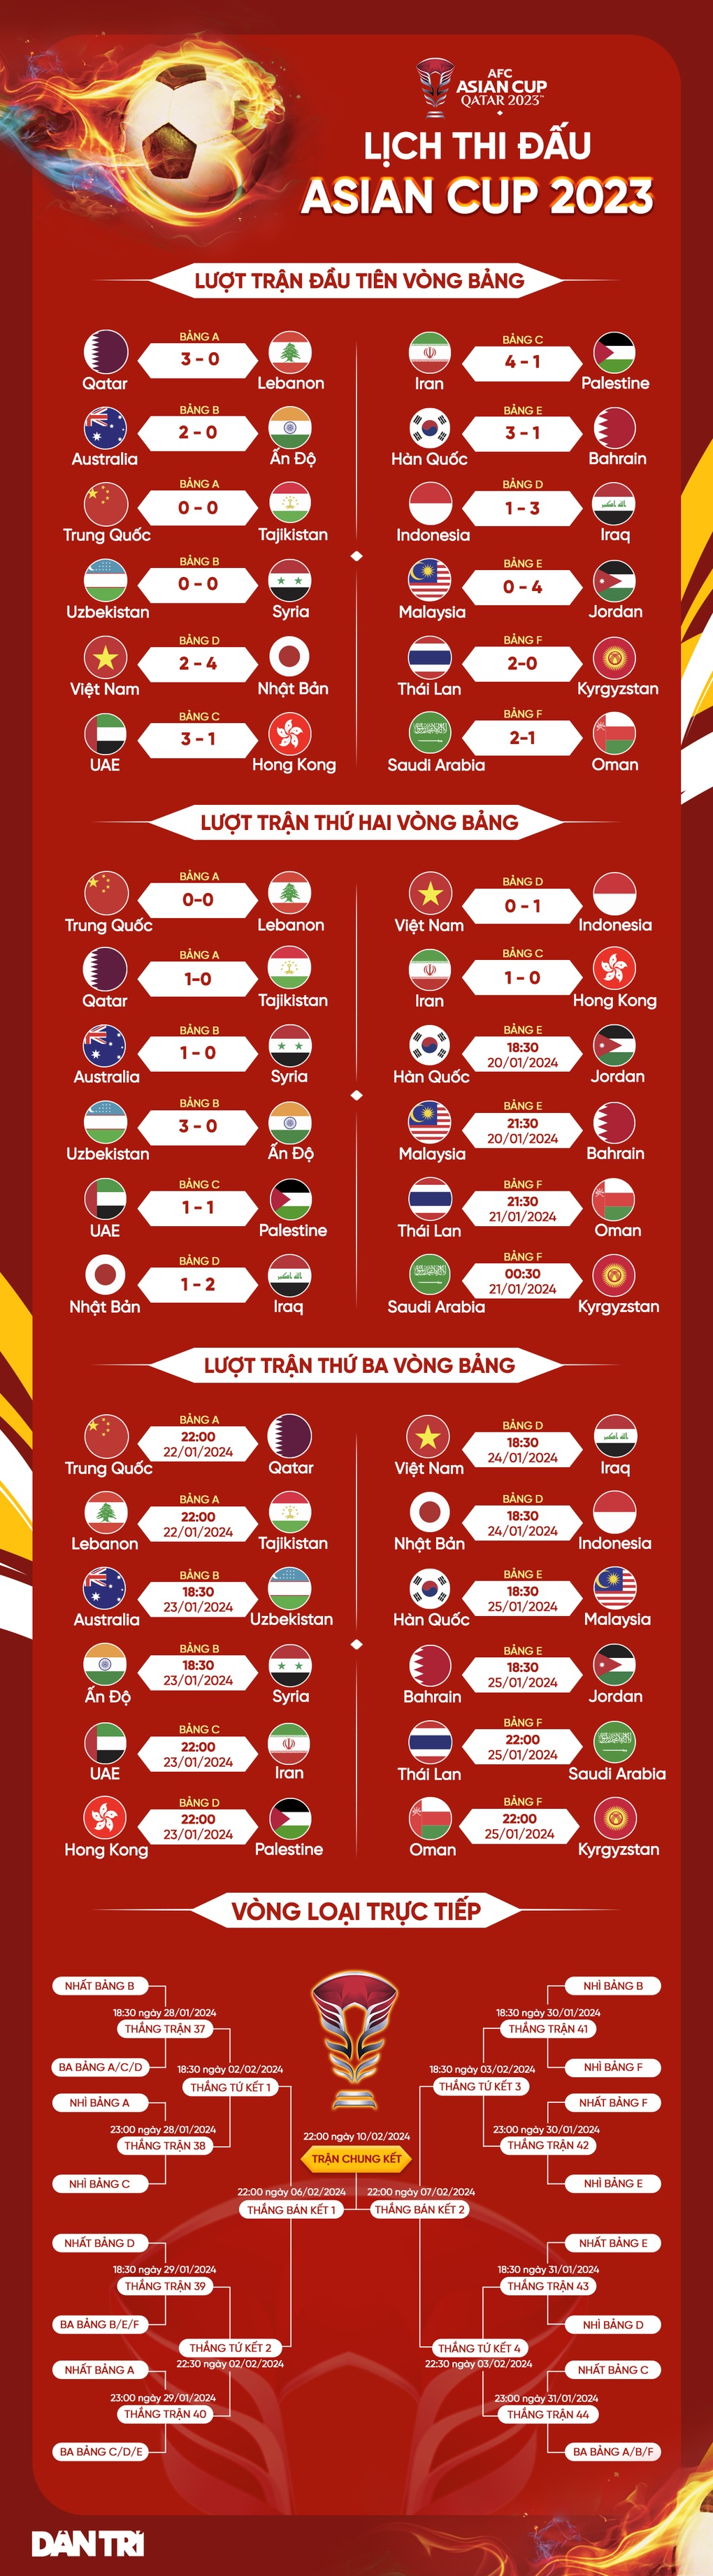 Thua Indonesia, tuyển Việt Nam bị loại khỏi Asian Cup 2023 - 4